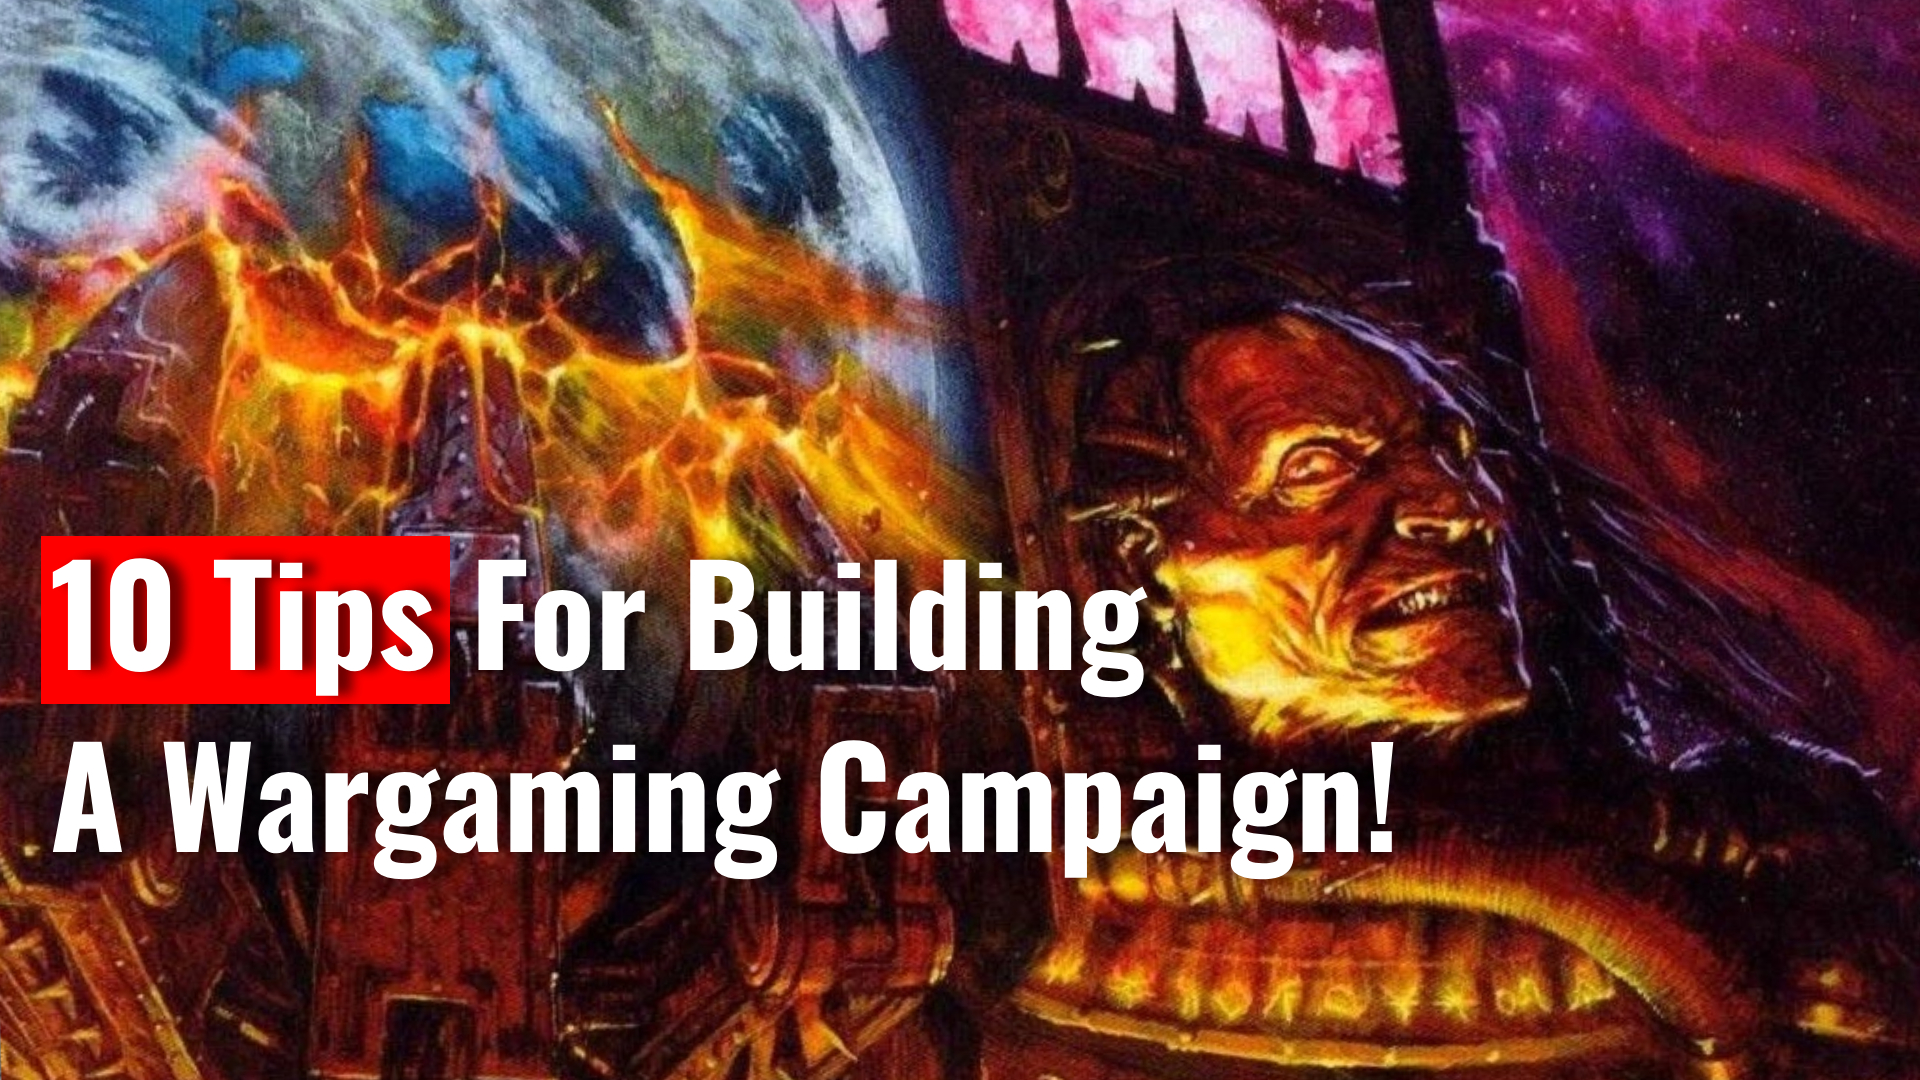 wargaming campaign coverimage v3